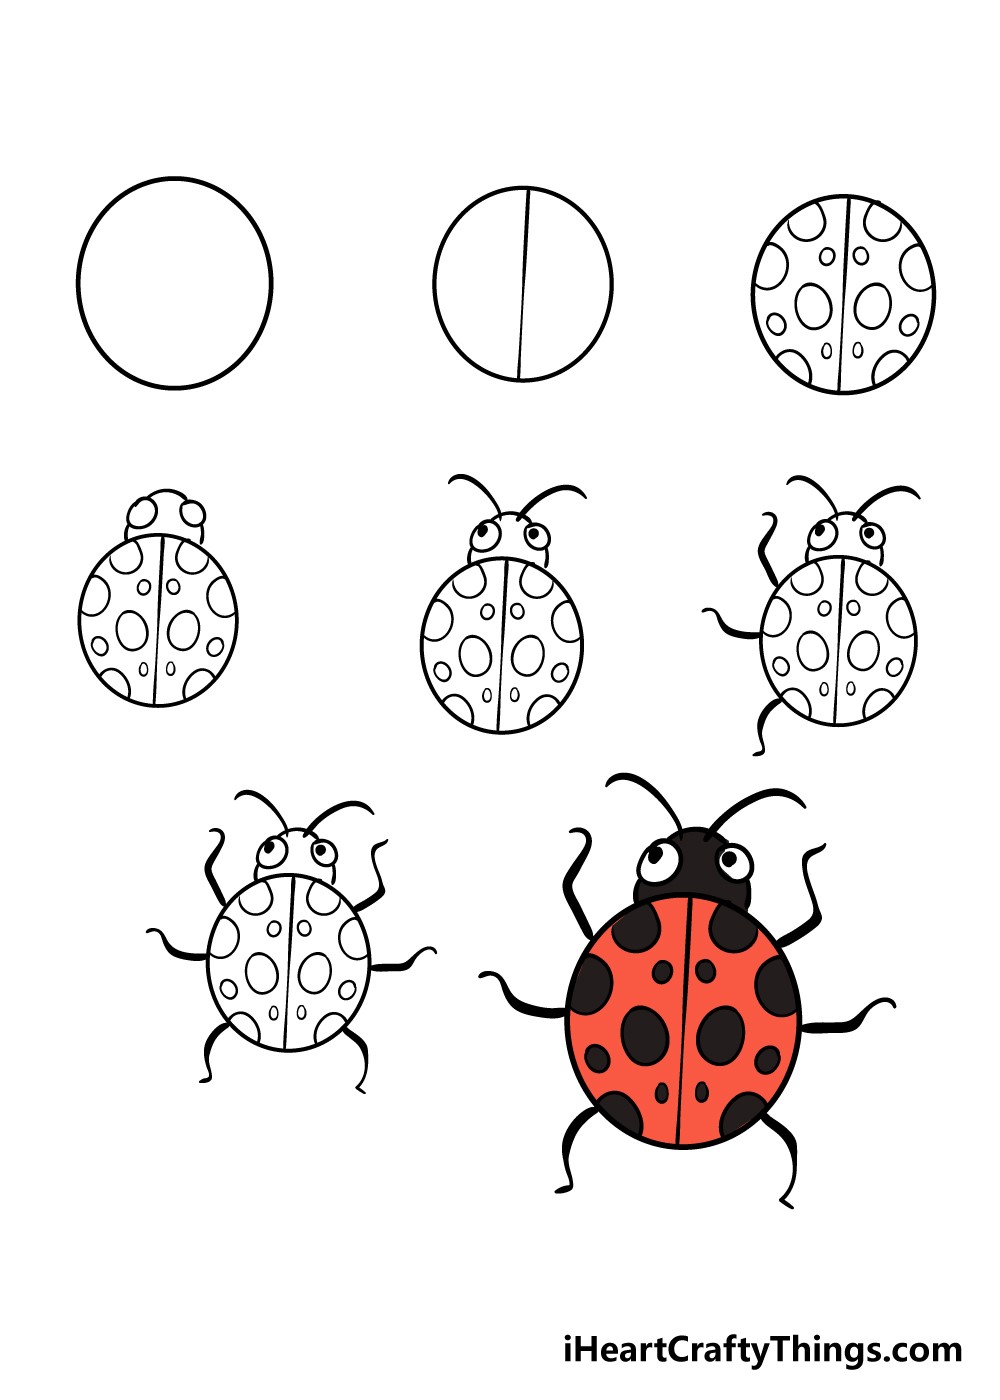 How to draw Ladybug idea 2